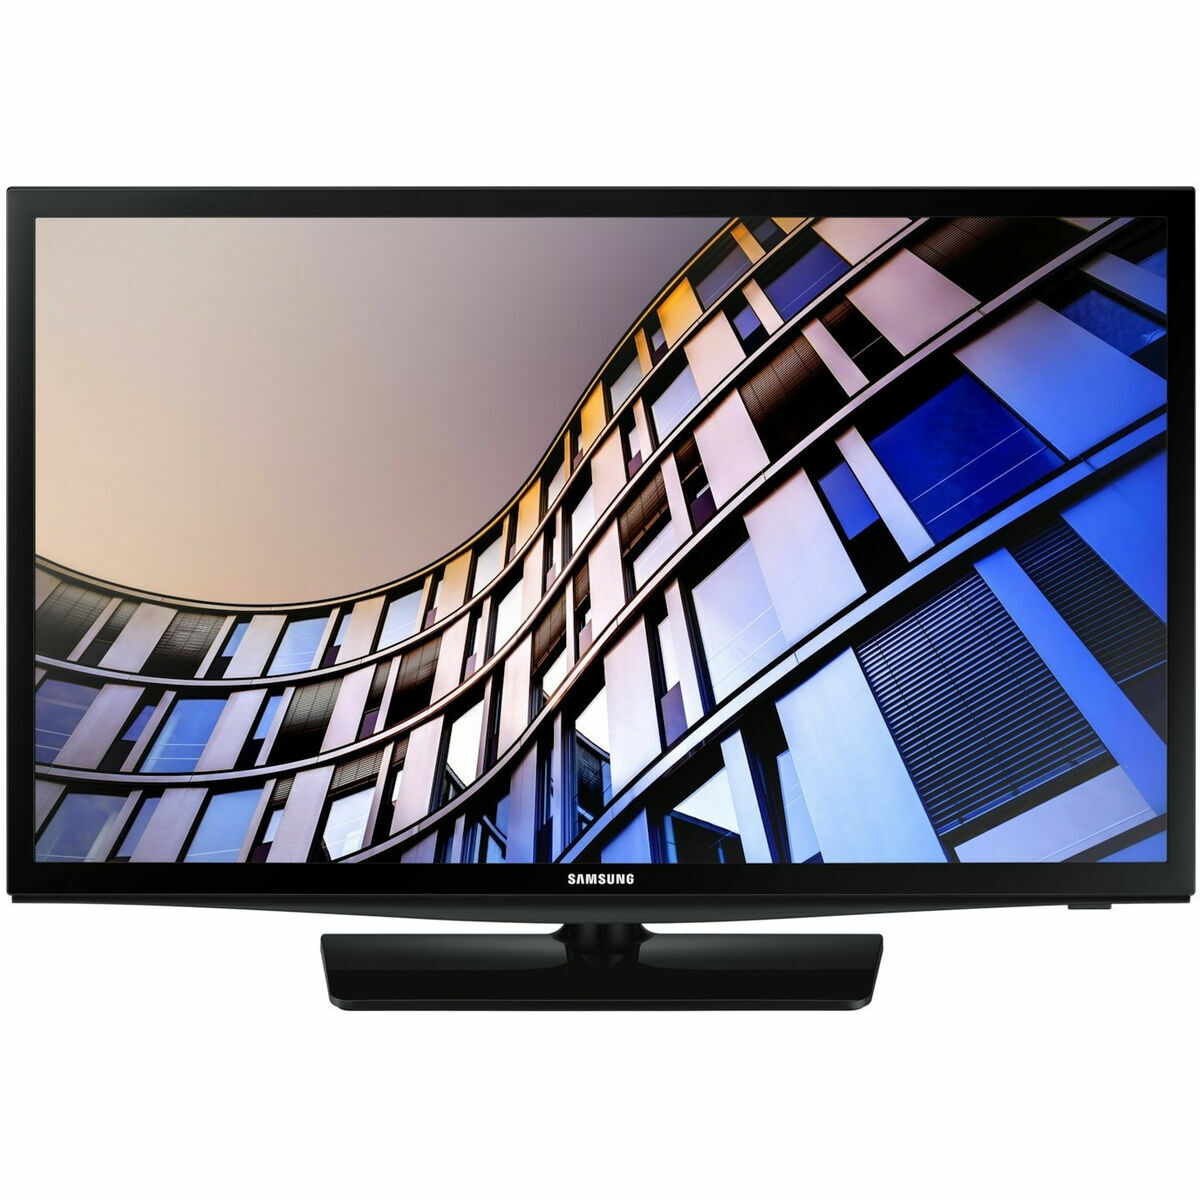 Smart TV Samsung UE24N4305 24" HD DLED WI-FI LED